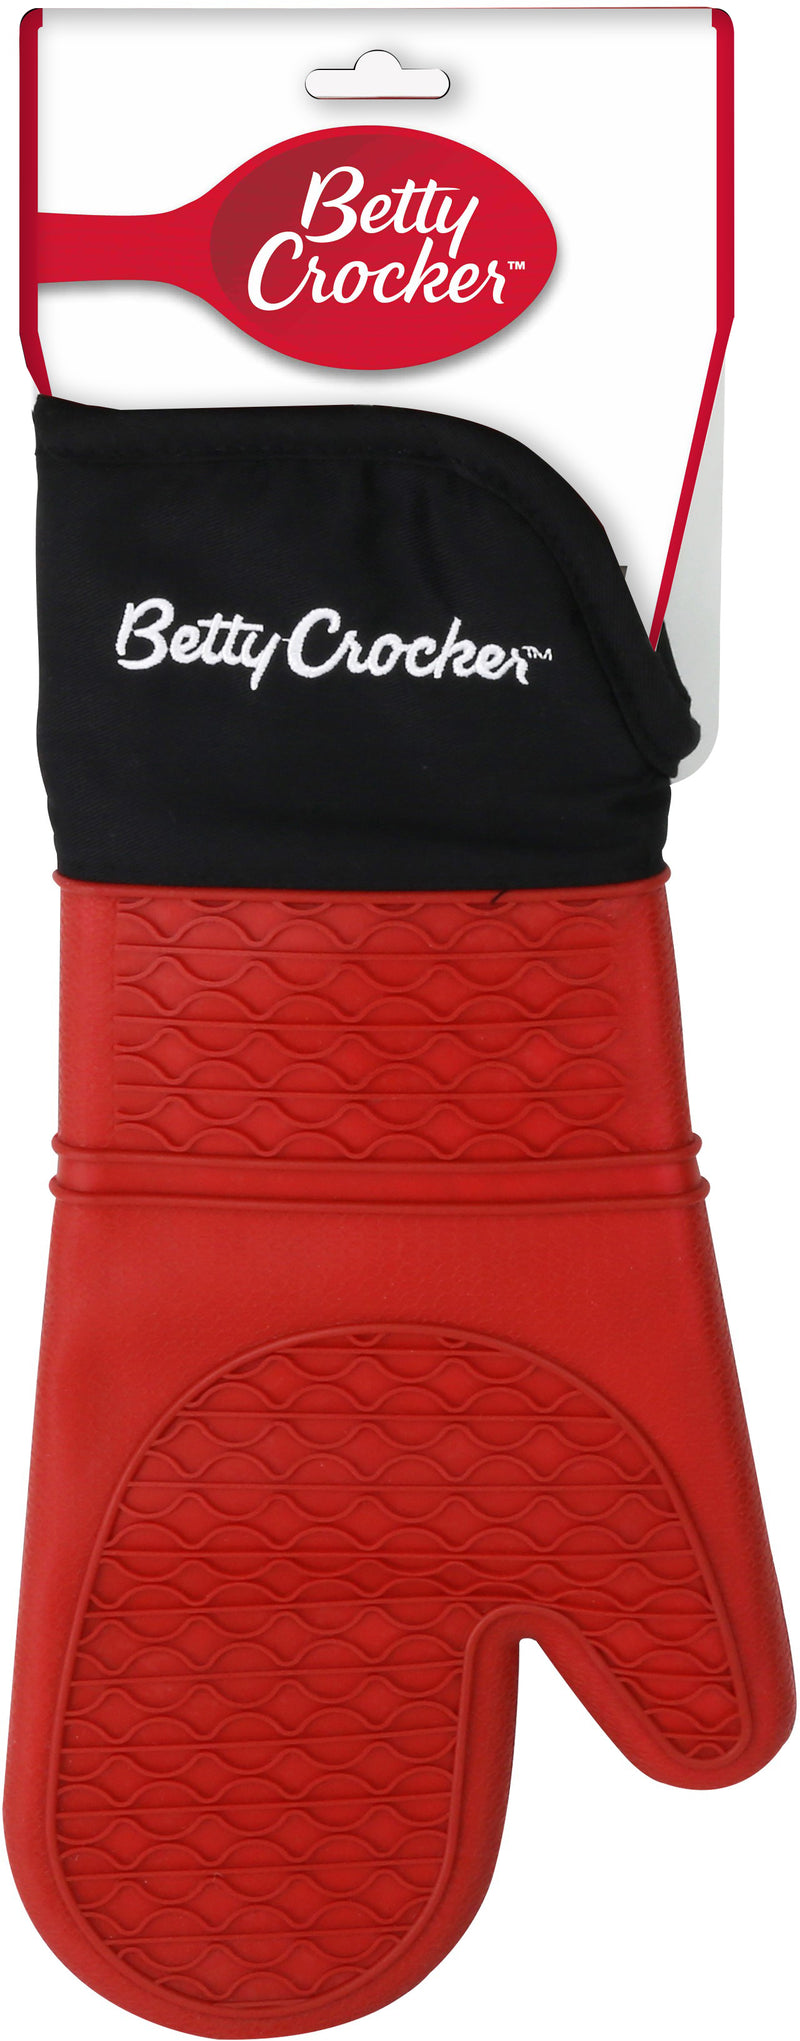 Betty Crocker Silicon Glove (34X18.5CM) Black & Red